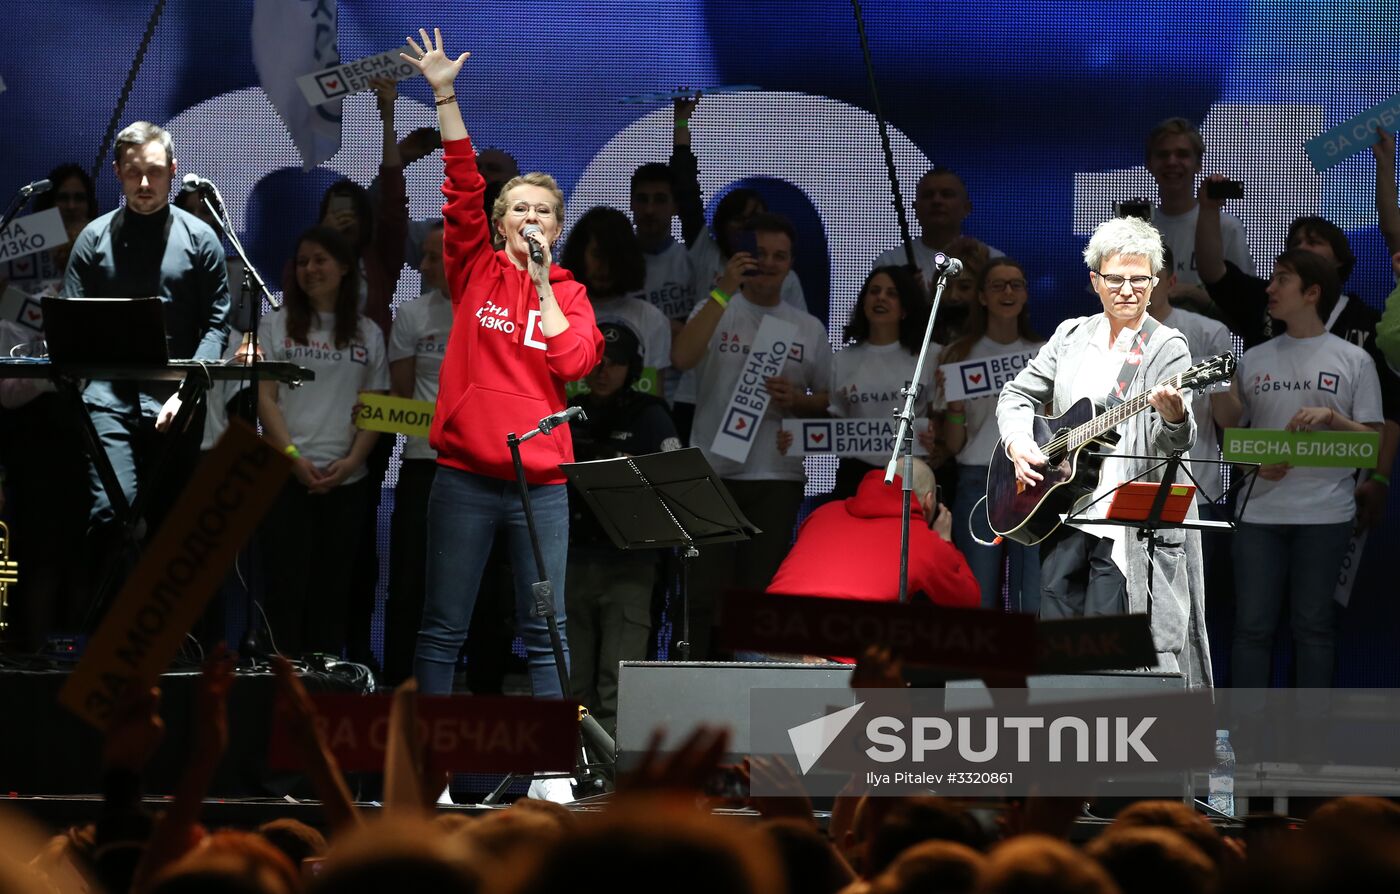 Meeting with presidential candidate Kseniya Sobchak